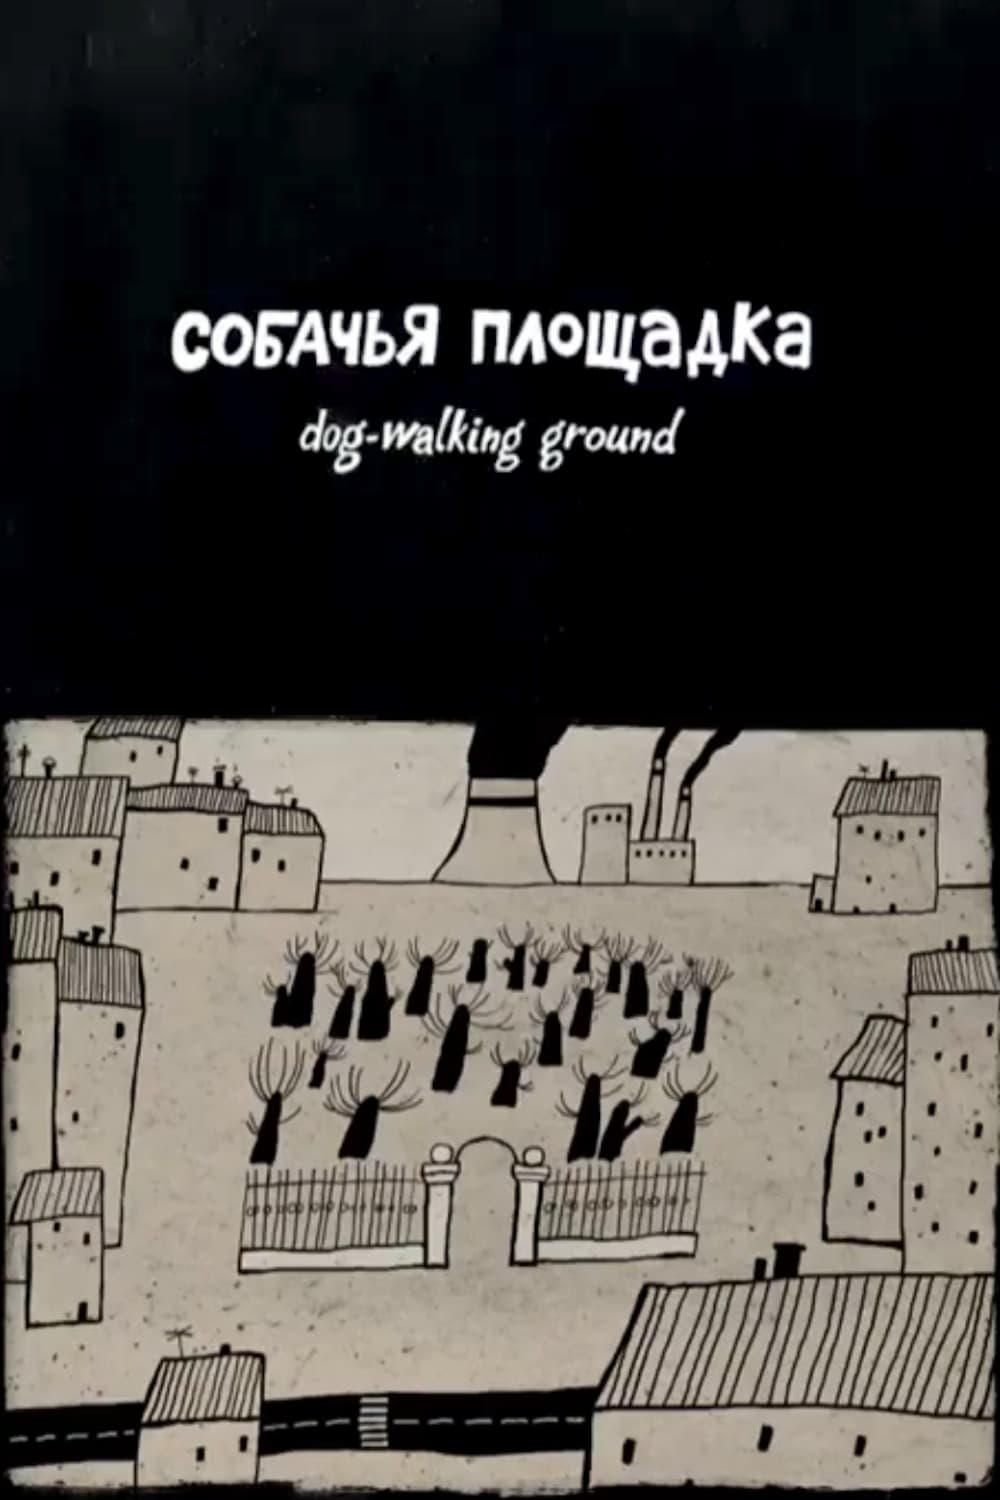 The Dog-Walking Ground